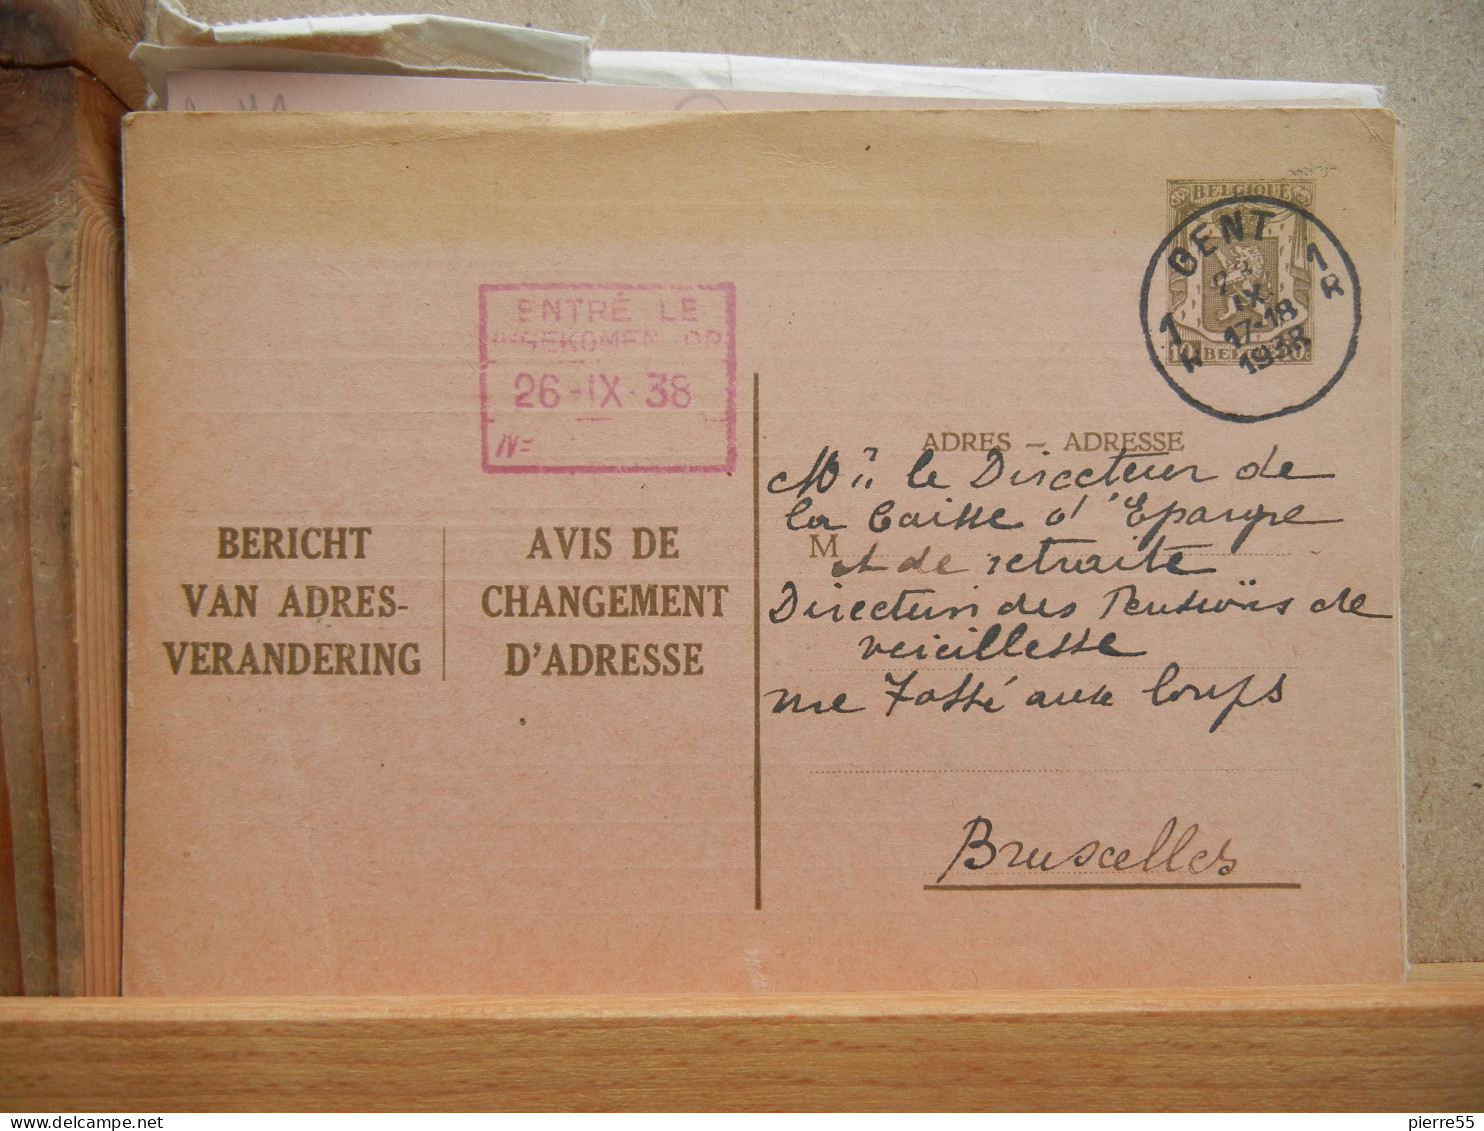 EP - Avis Changement Adresse - 10c Vert Lion Héraldique Oblit Gent 1938 + Cachet Date Rentree + Cachet CGER - Avis Changement Adresse